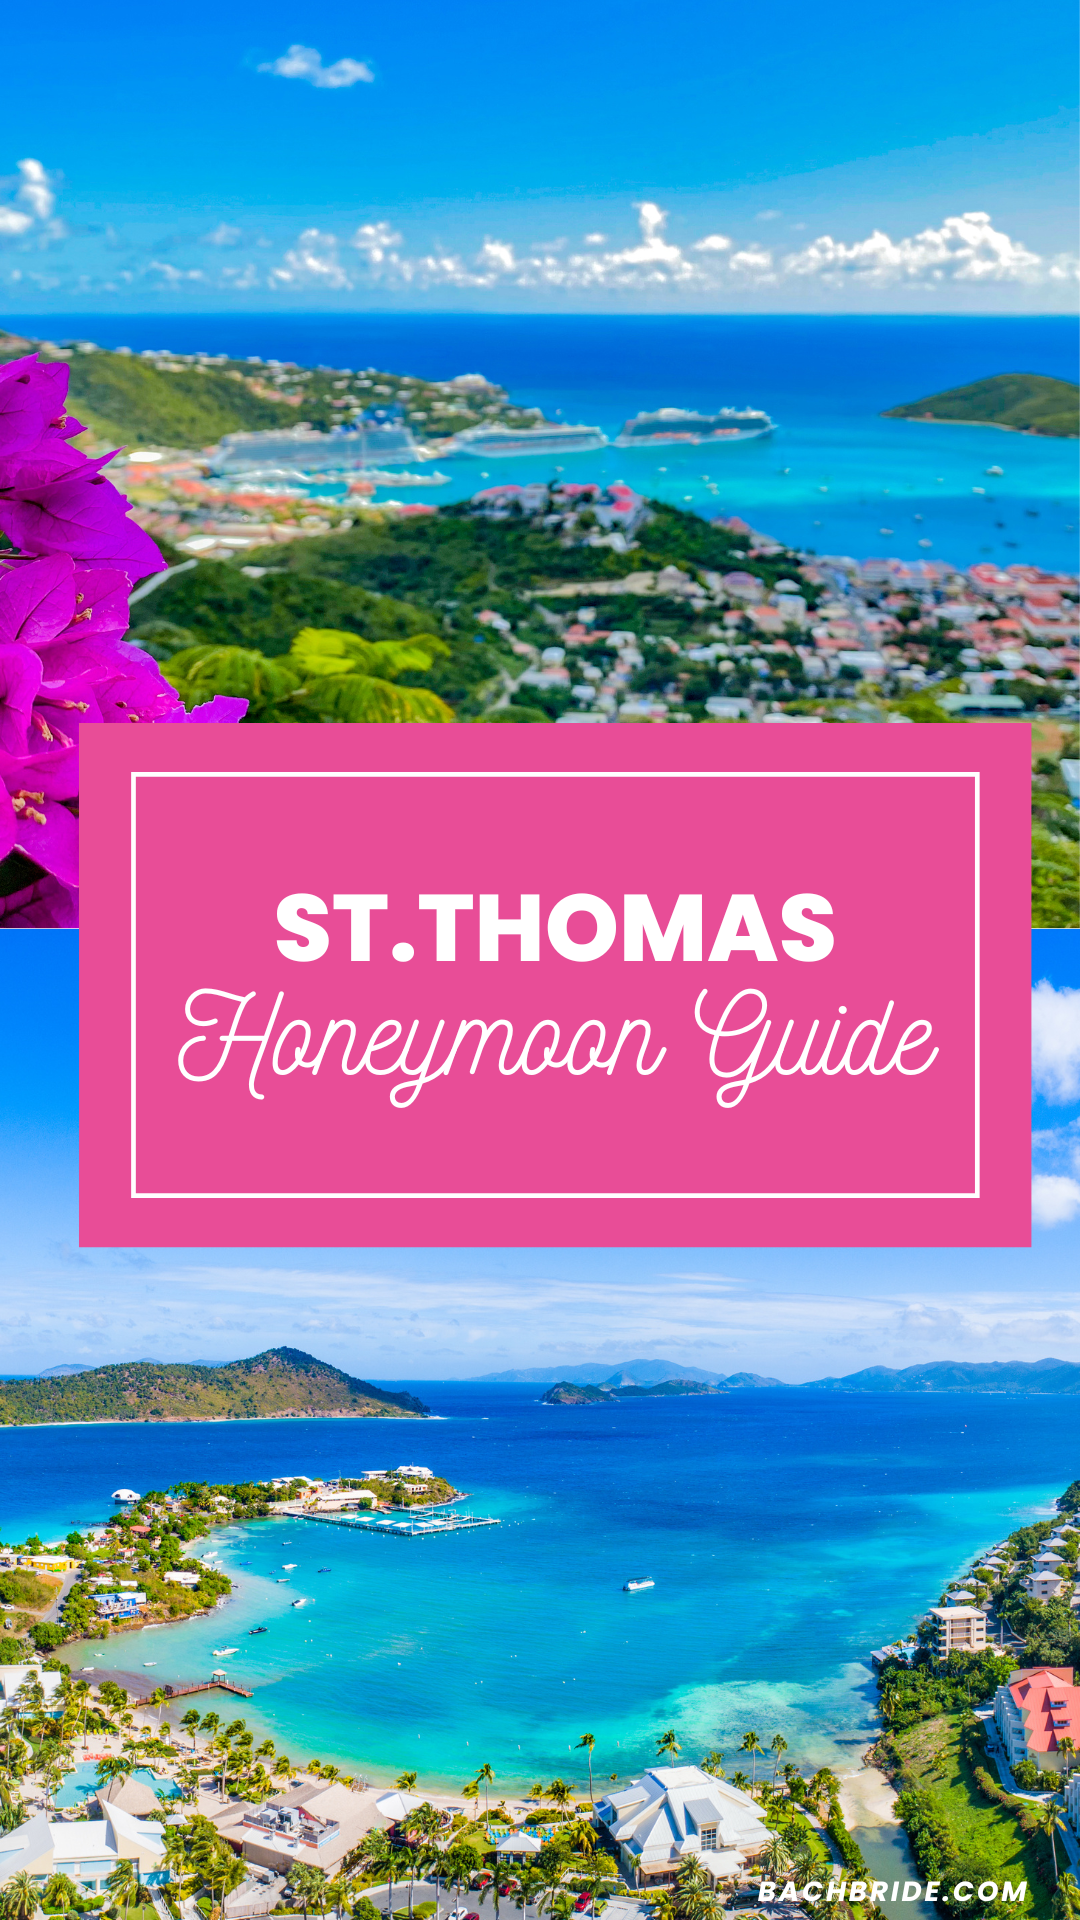 St. Thomas Honeymoon